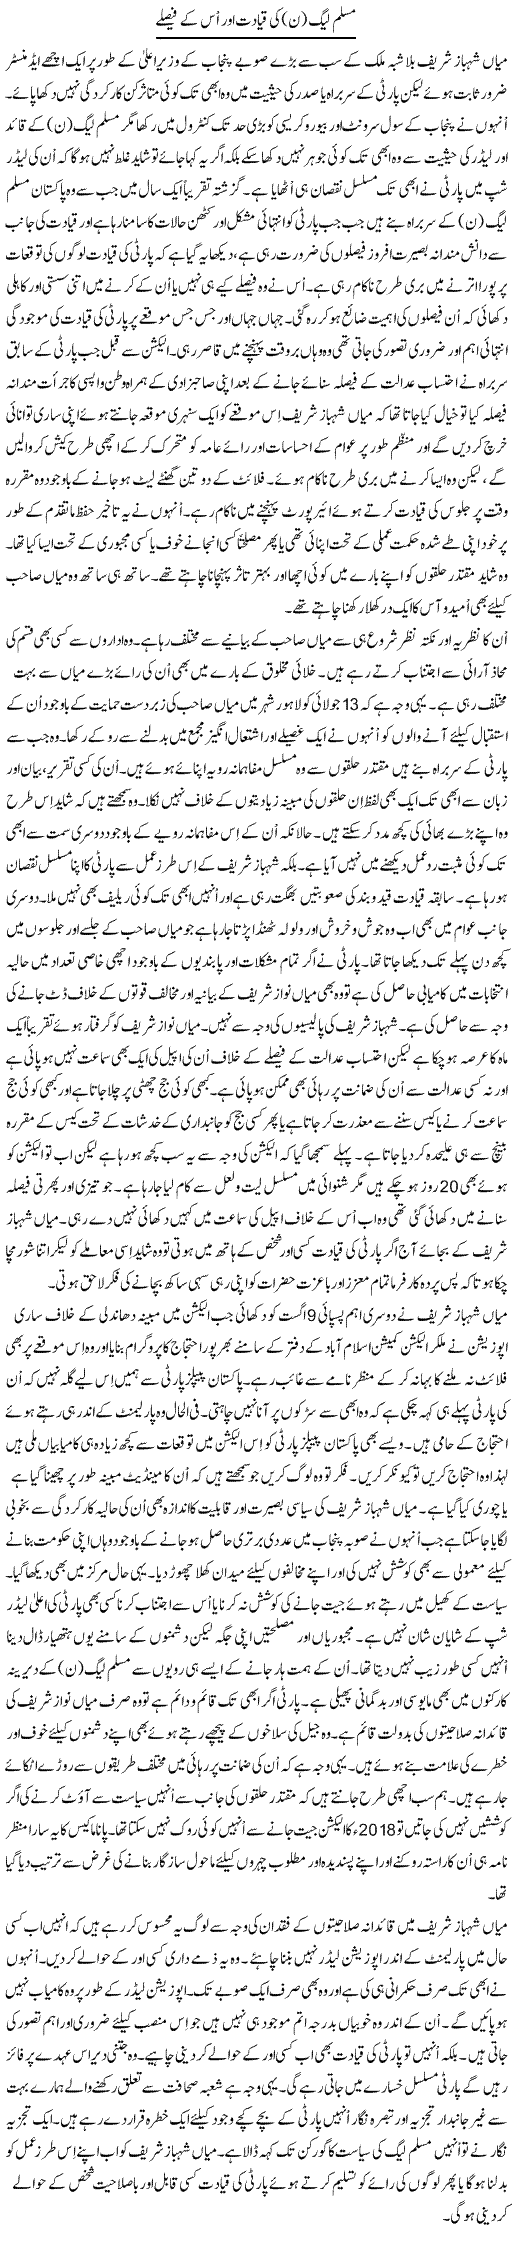 Muslim League (N) Ki Qayadat Aur Us Ke Faislay | Dr. Mansoor Noorani | Daily Urdu Columns